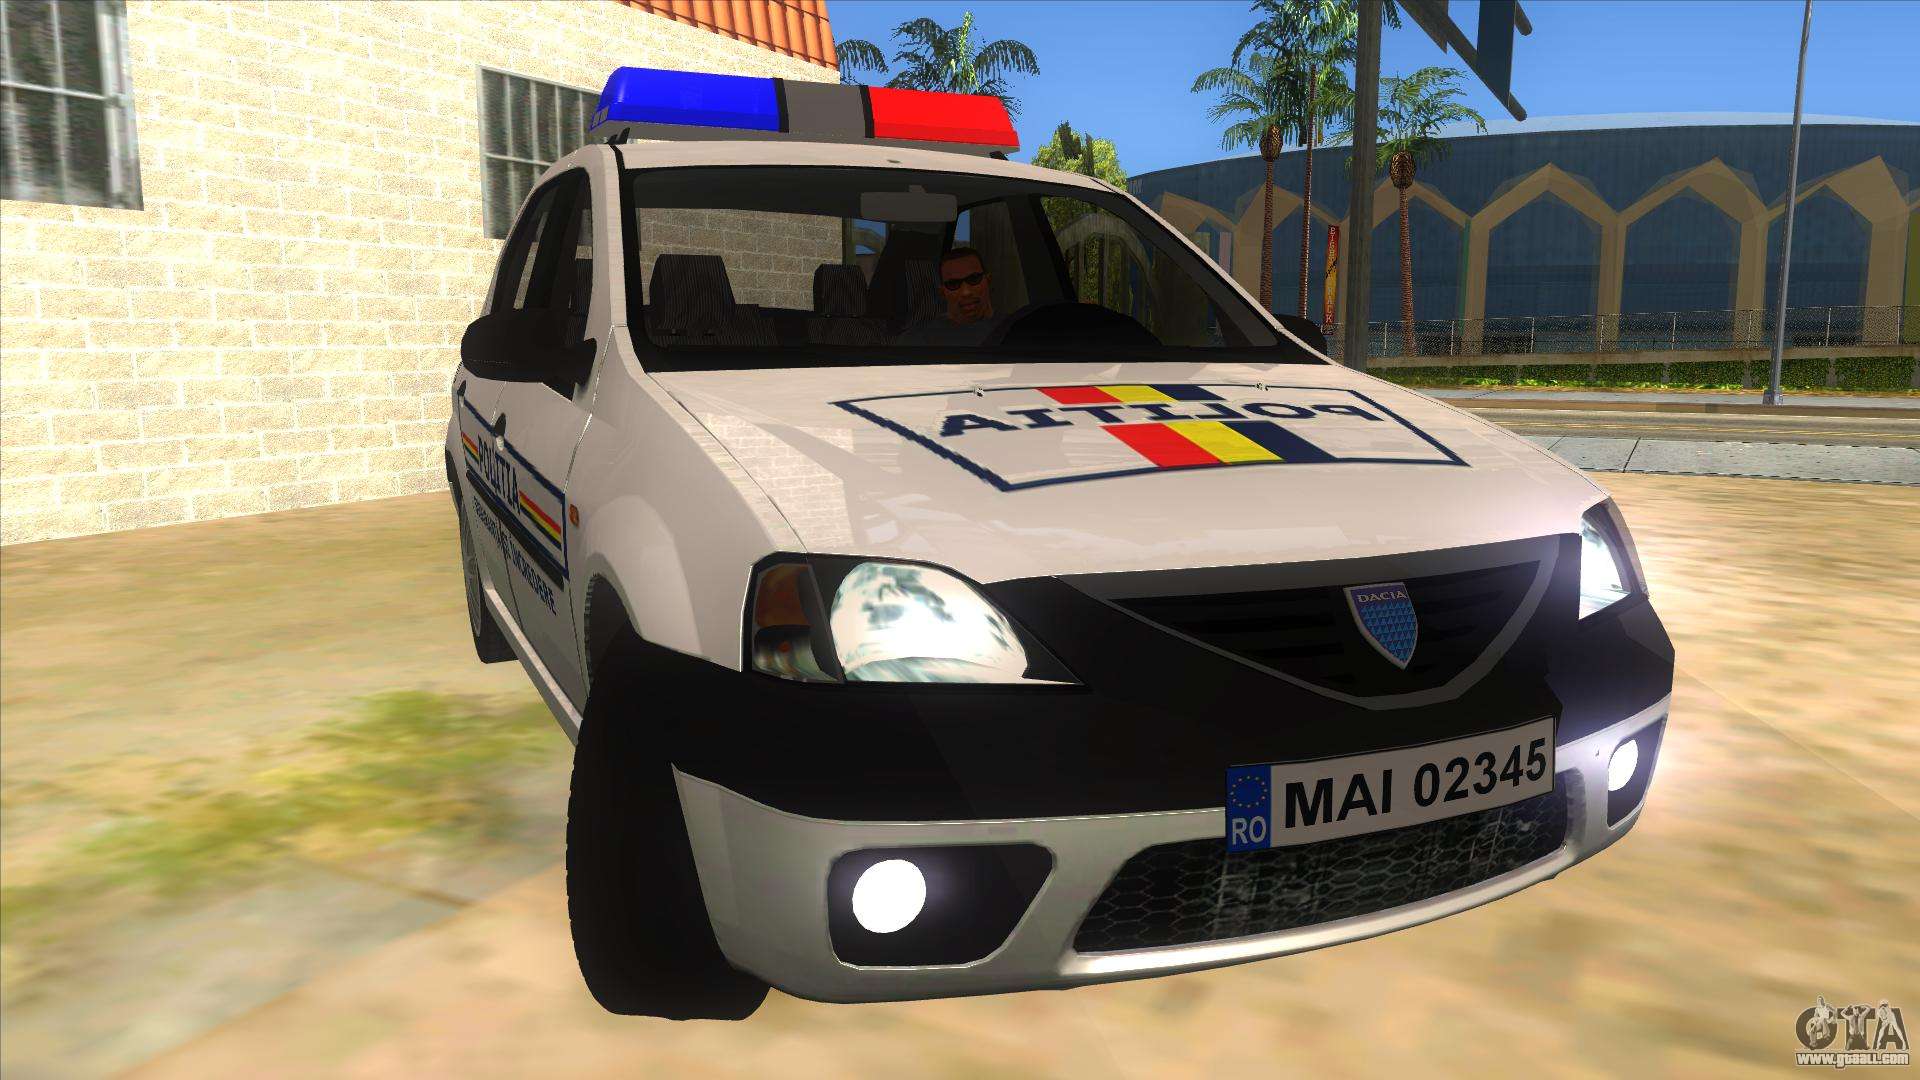 writing Arena petticoat Dacia Logan Romania Police for GTA San Andreas